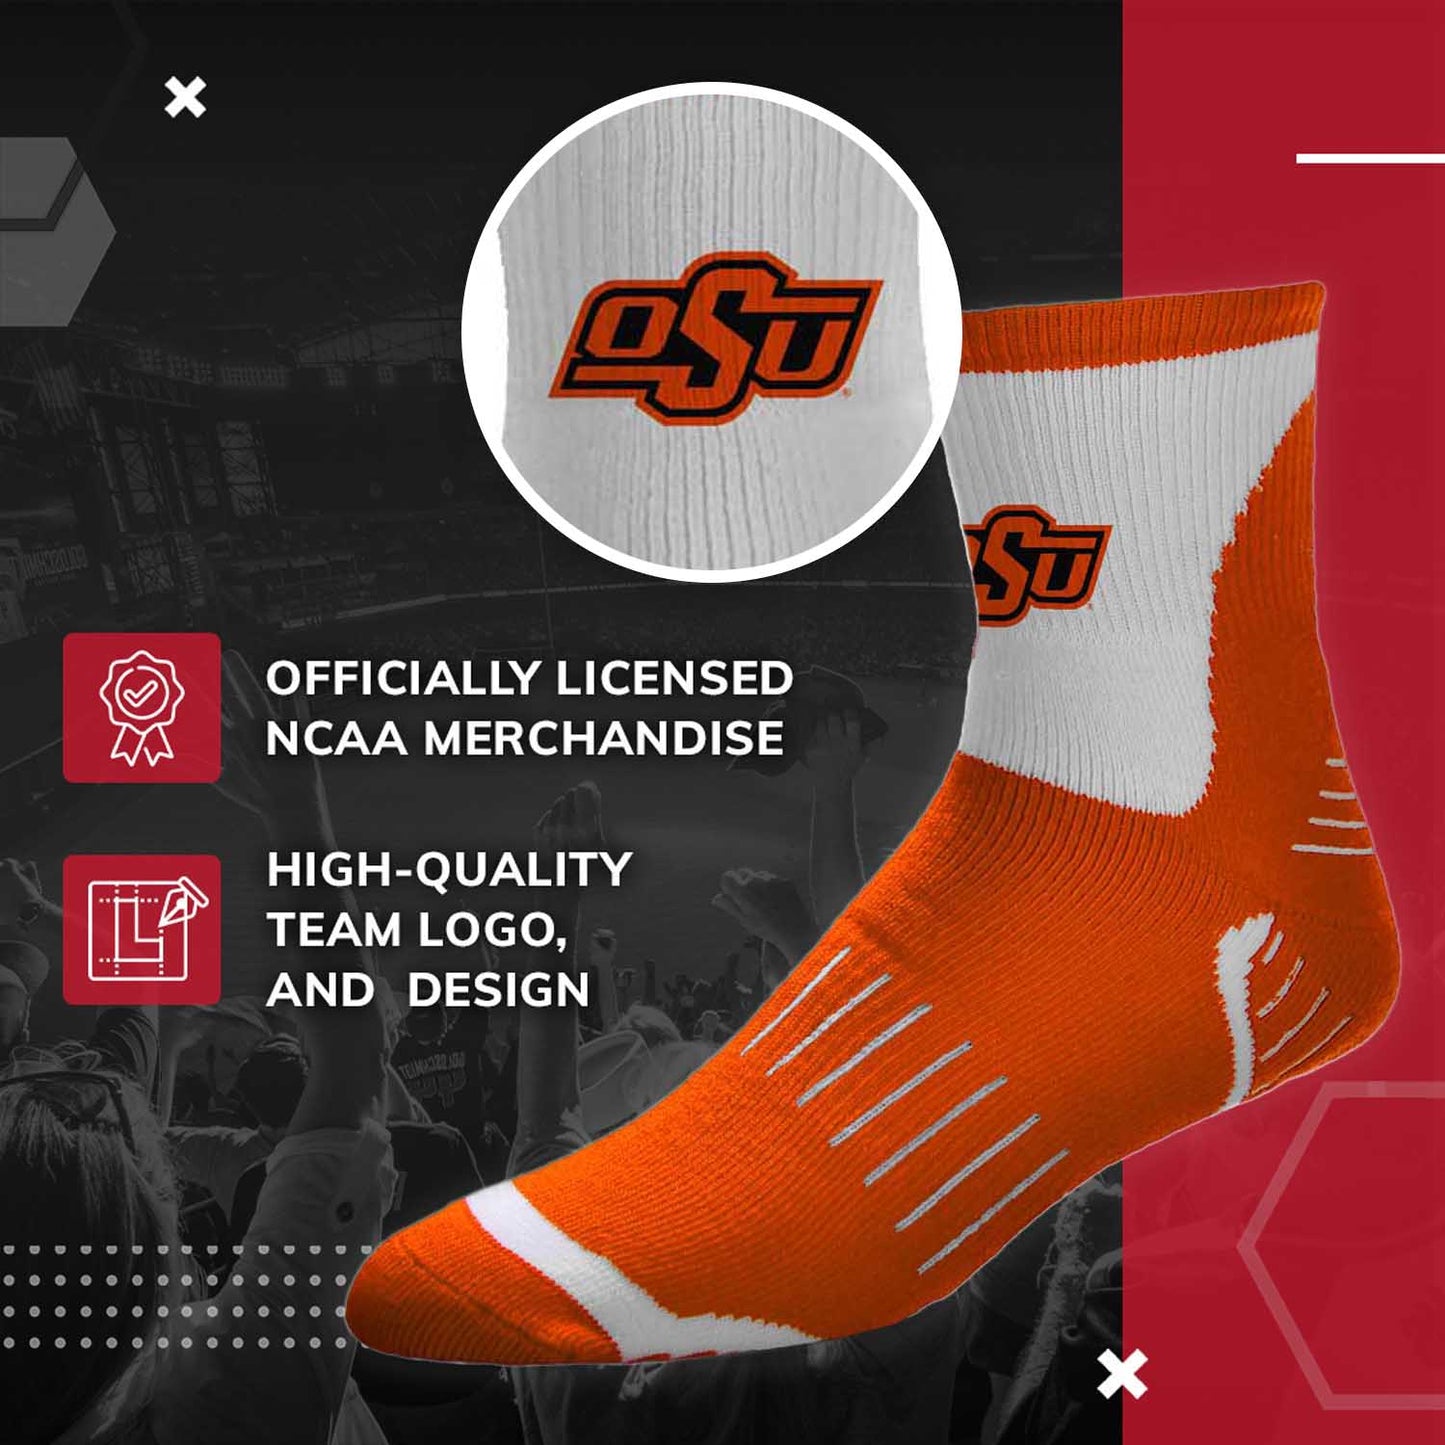 Oklahoma State Cowboys Adult NCAA Surge Quarter Length Crew Socks - Orange